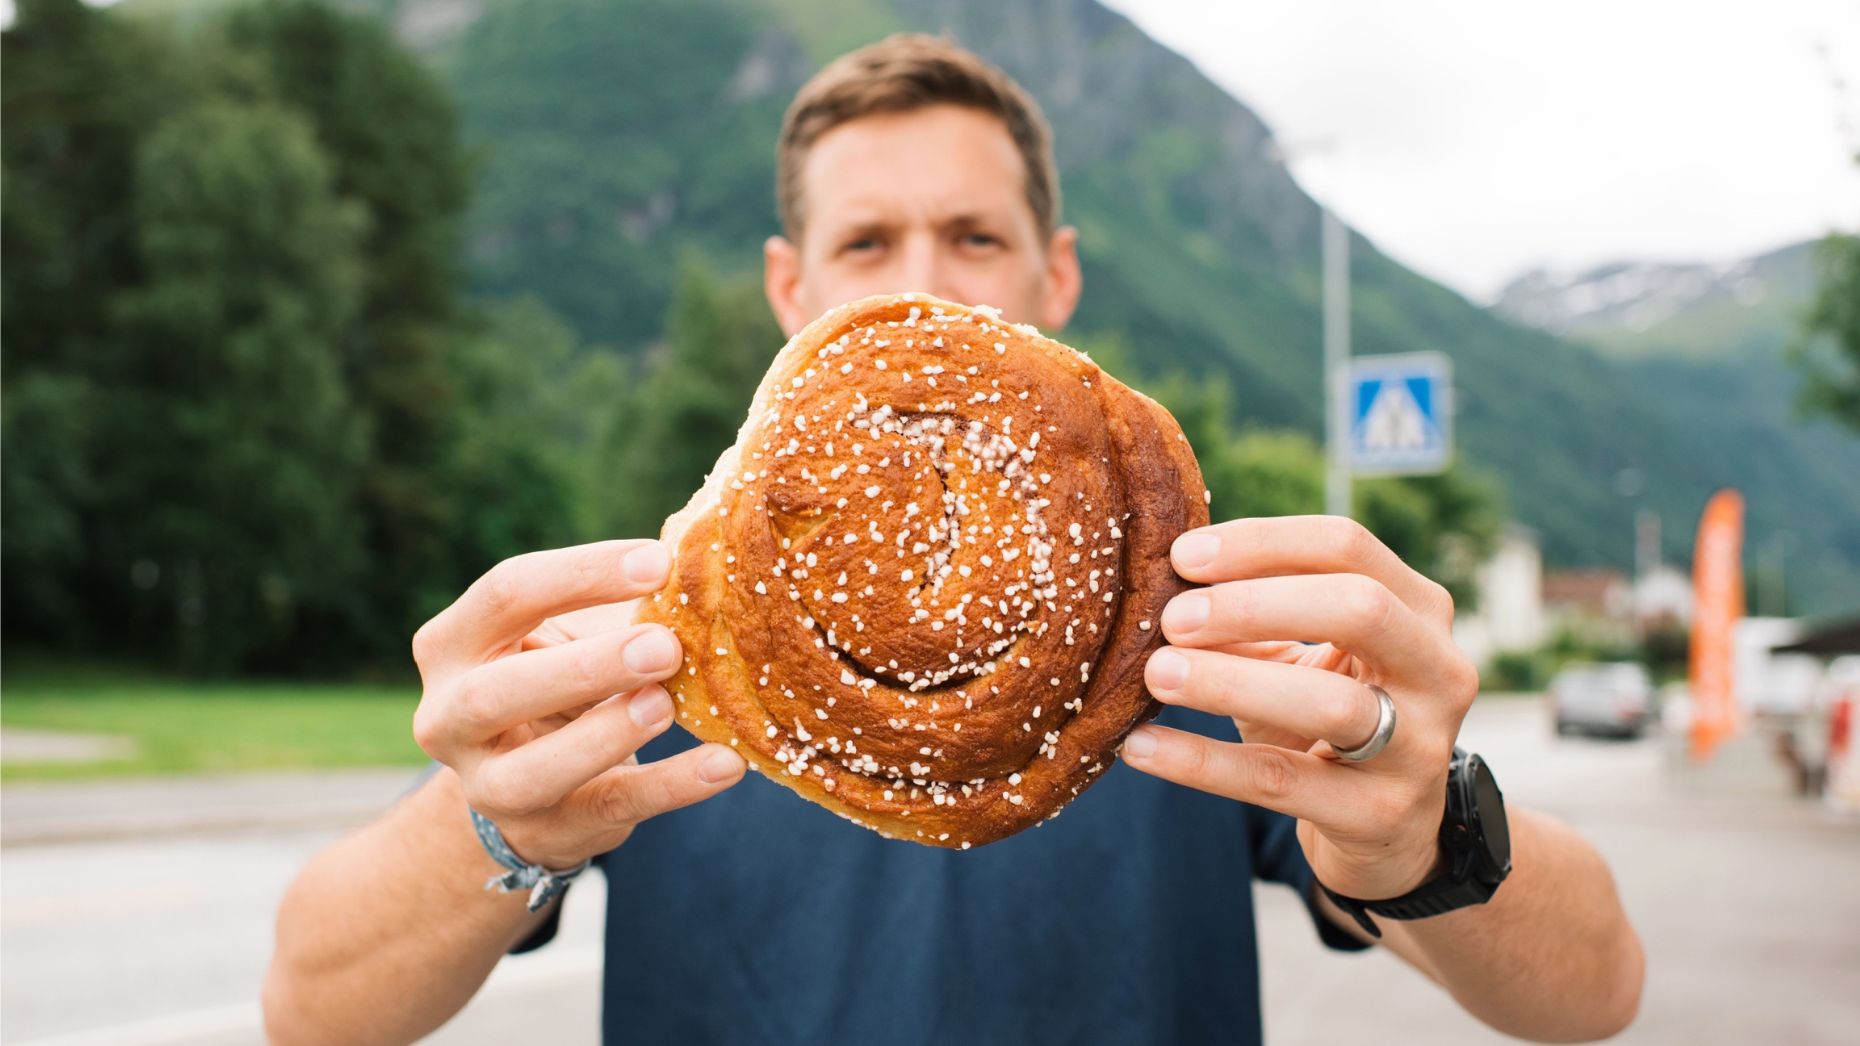 Man holding a Norwegian cinnamon bun in Norway.